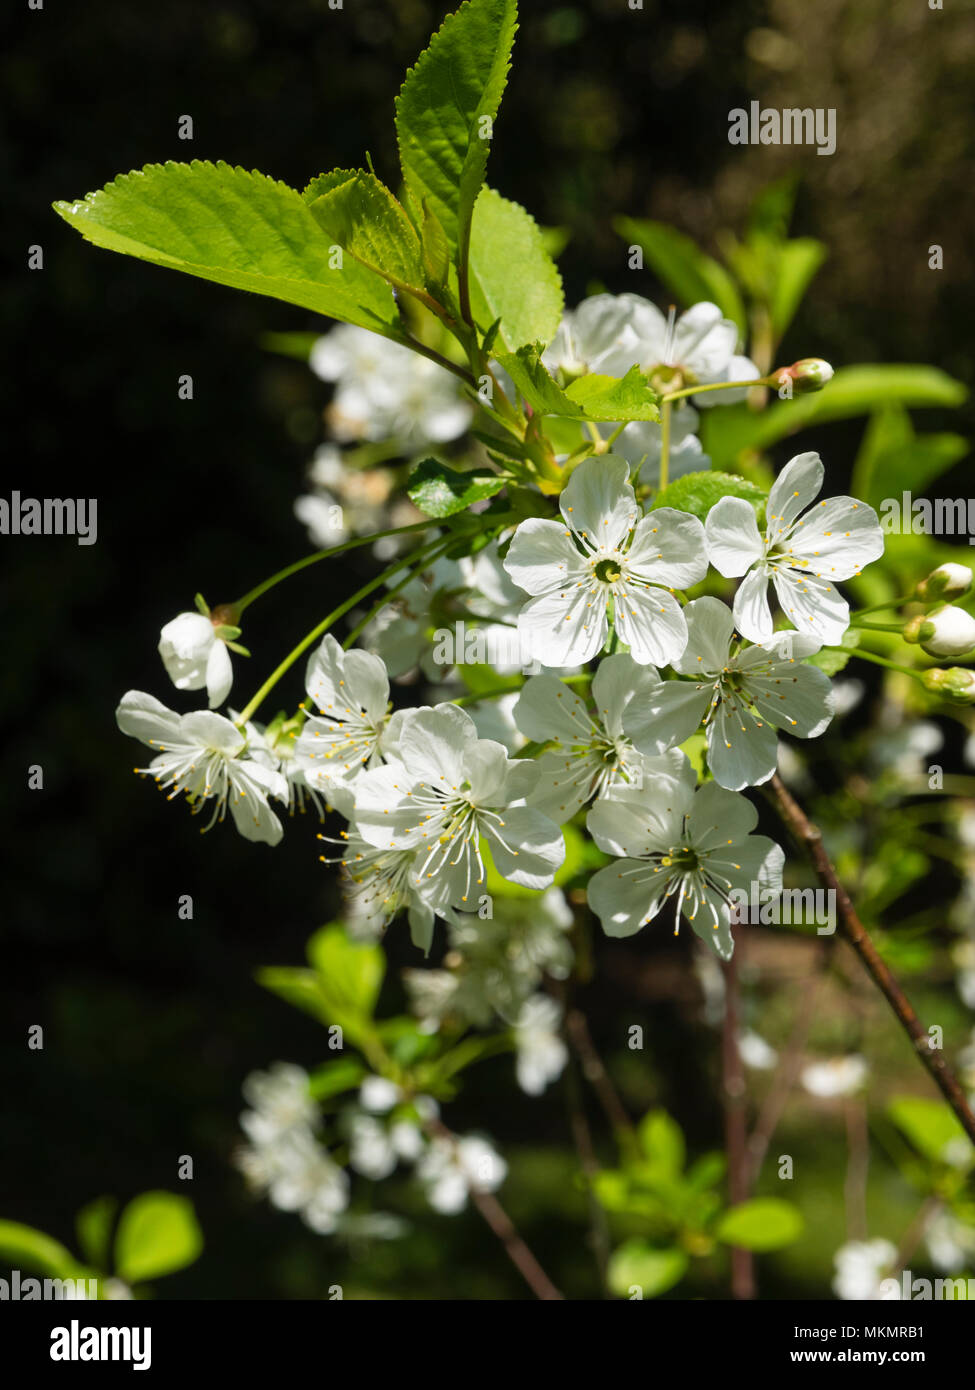 White spring flowers of the hardy Morello cherry, Prunus cerasus 'Morello' Stock Photo